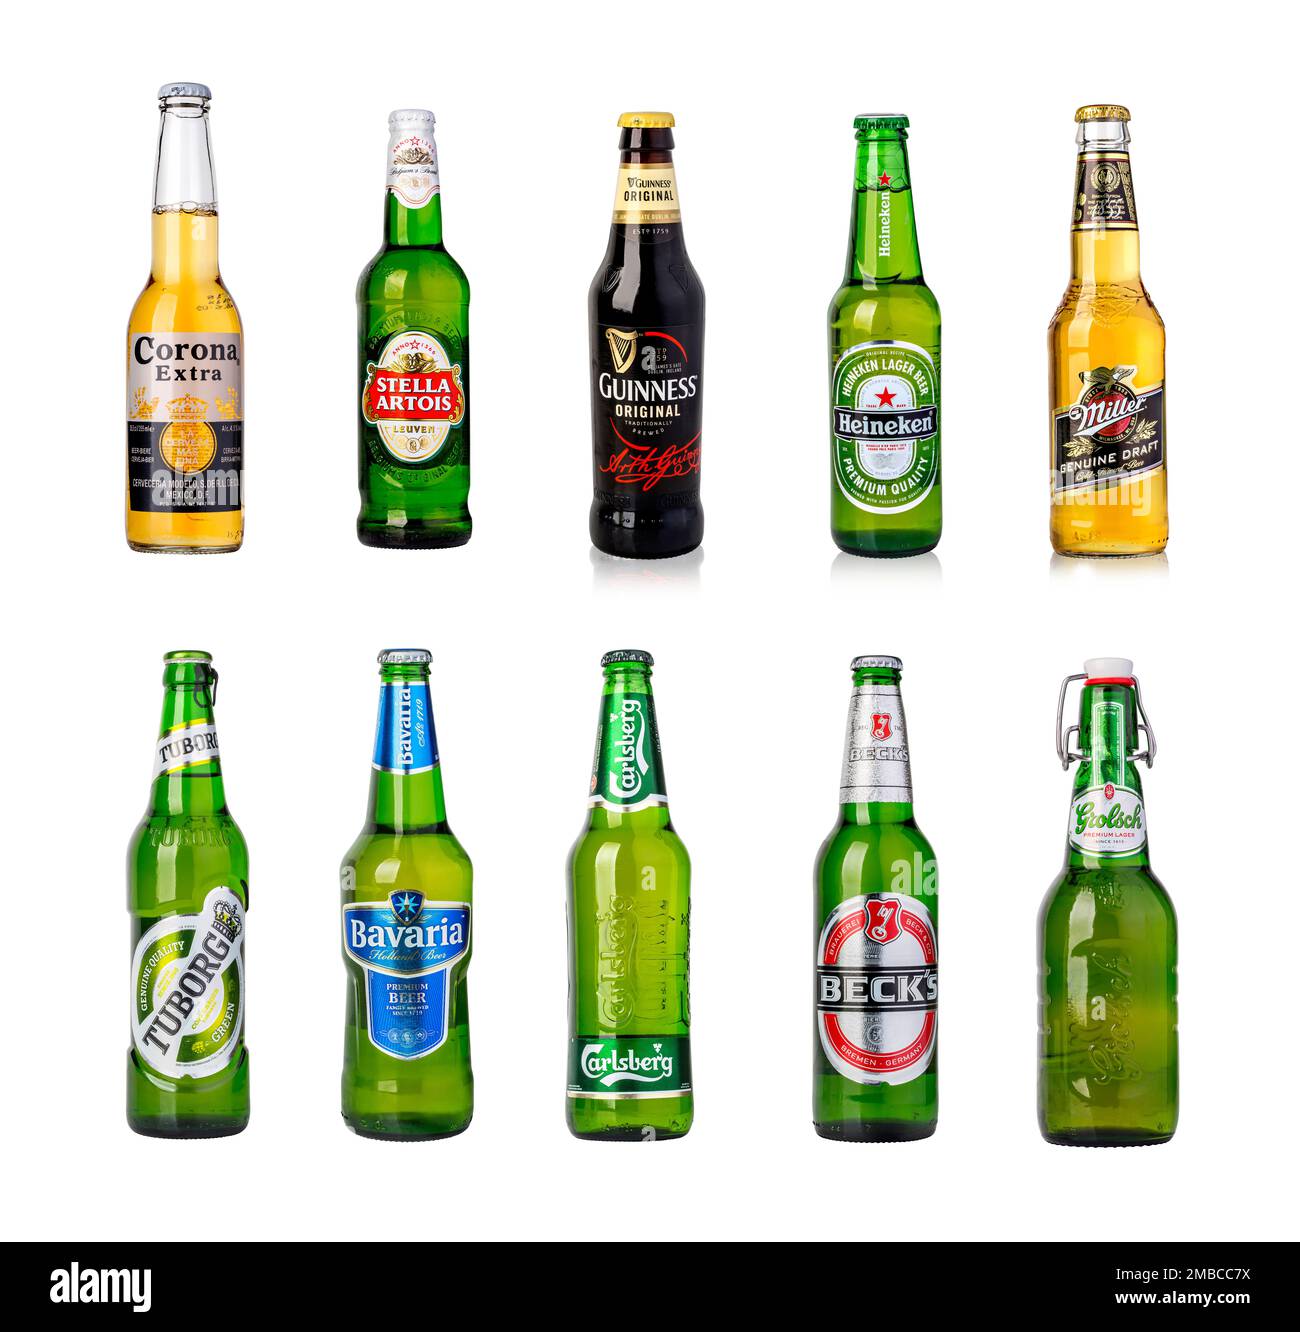 CHISINAU, MOLDOVA - January 04, 2016: Photo of a  bottles of Corona Extra, Stela artoua, guinness, Heineken, Millir, Tuborg, bavaria, Carlsberd, Beck, Stock Photo